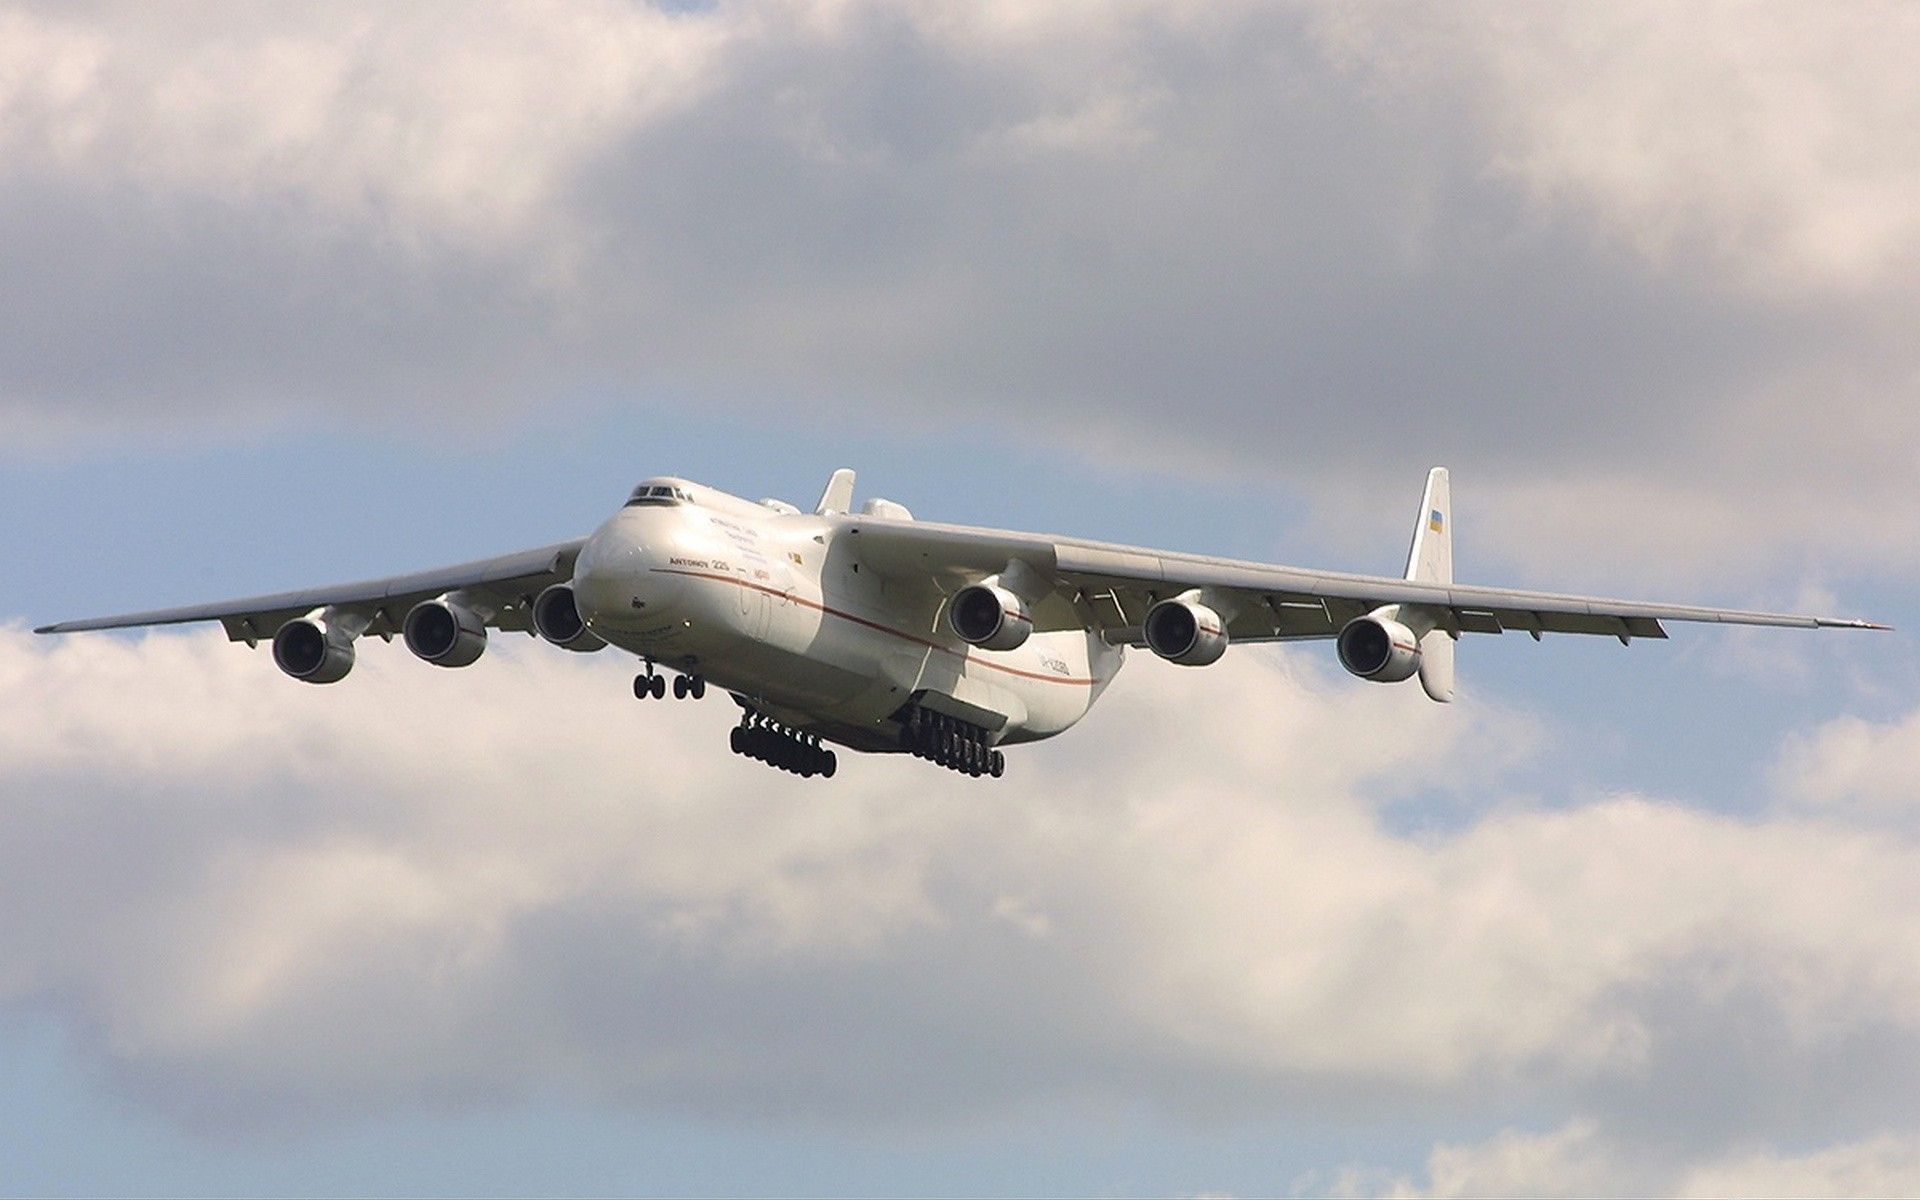 Download desktop wallpaper Cargo plane Antonov (AN 225) coming in to land